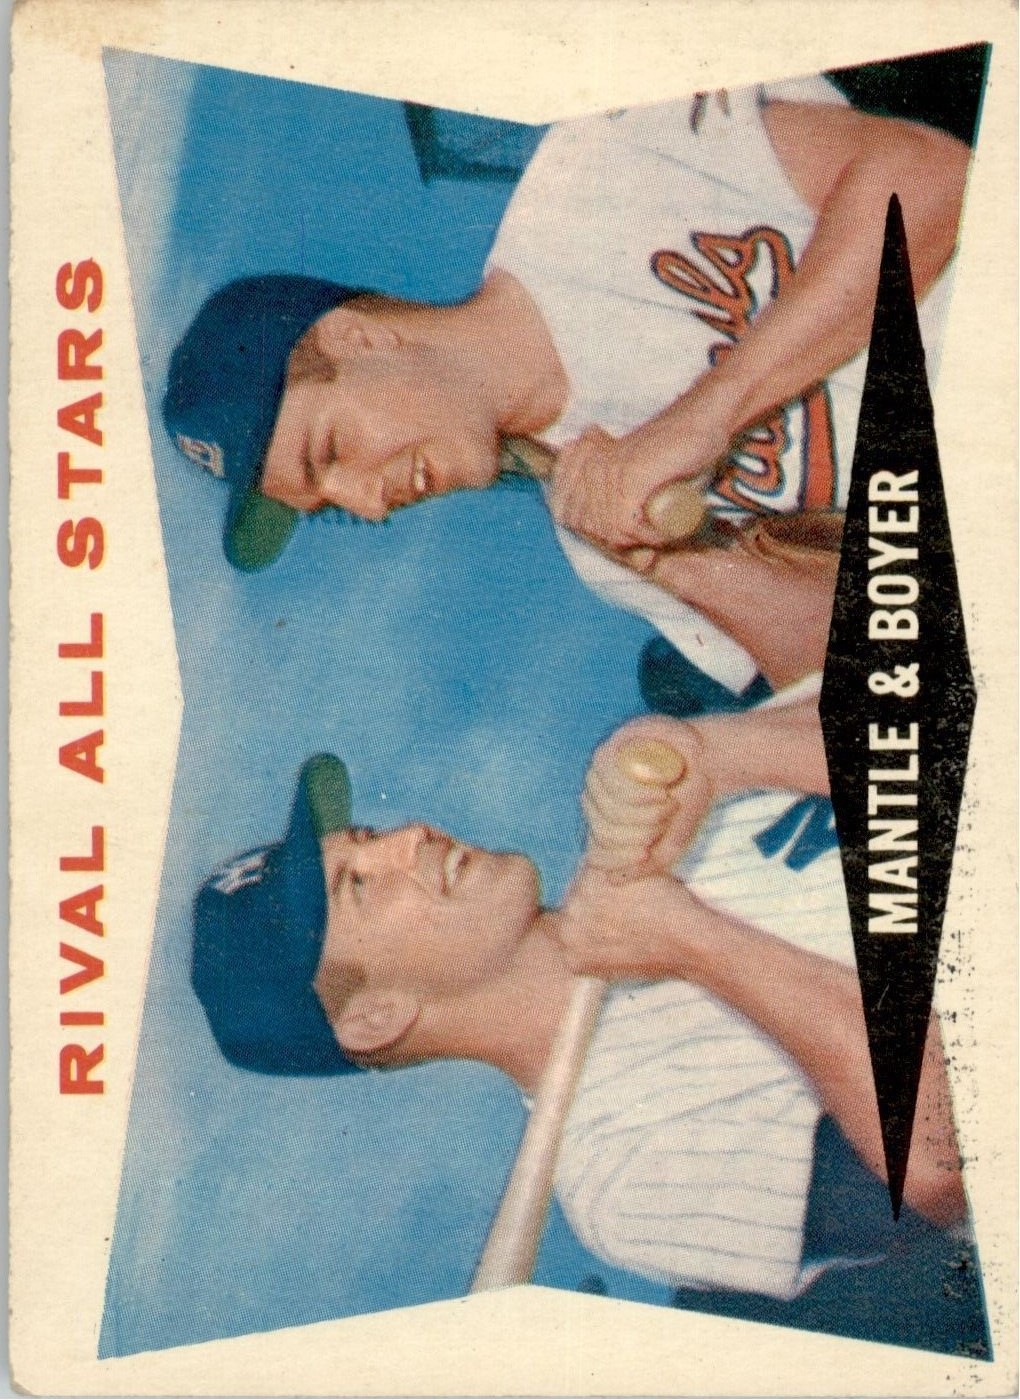 1960 Topps #160 Rival All-Stars/Mickey Mantle/Ken Boyer